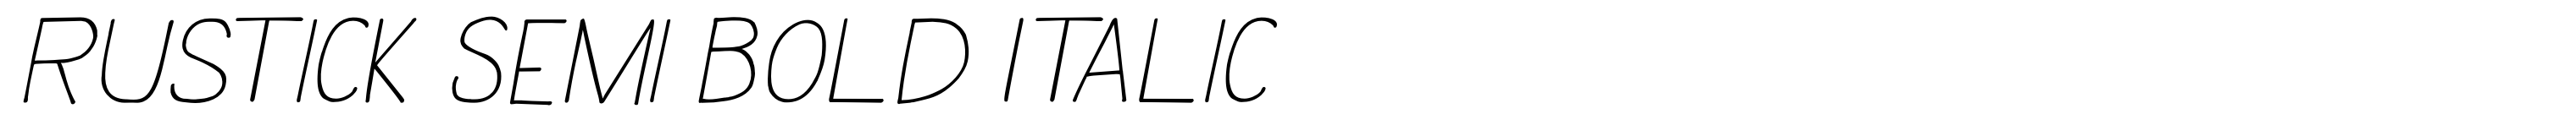 Rustick Semi Bold Italic